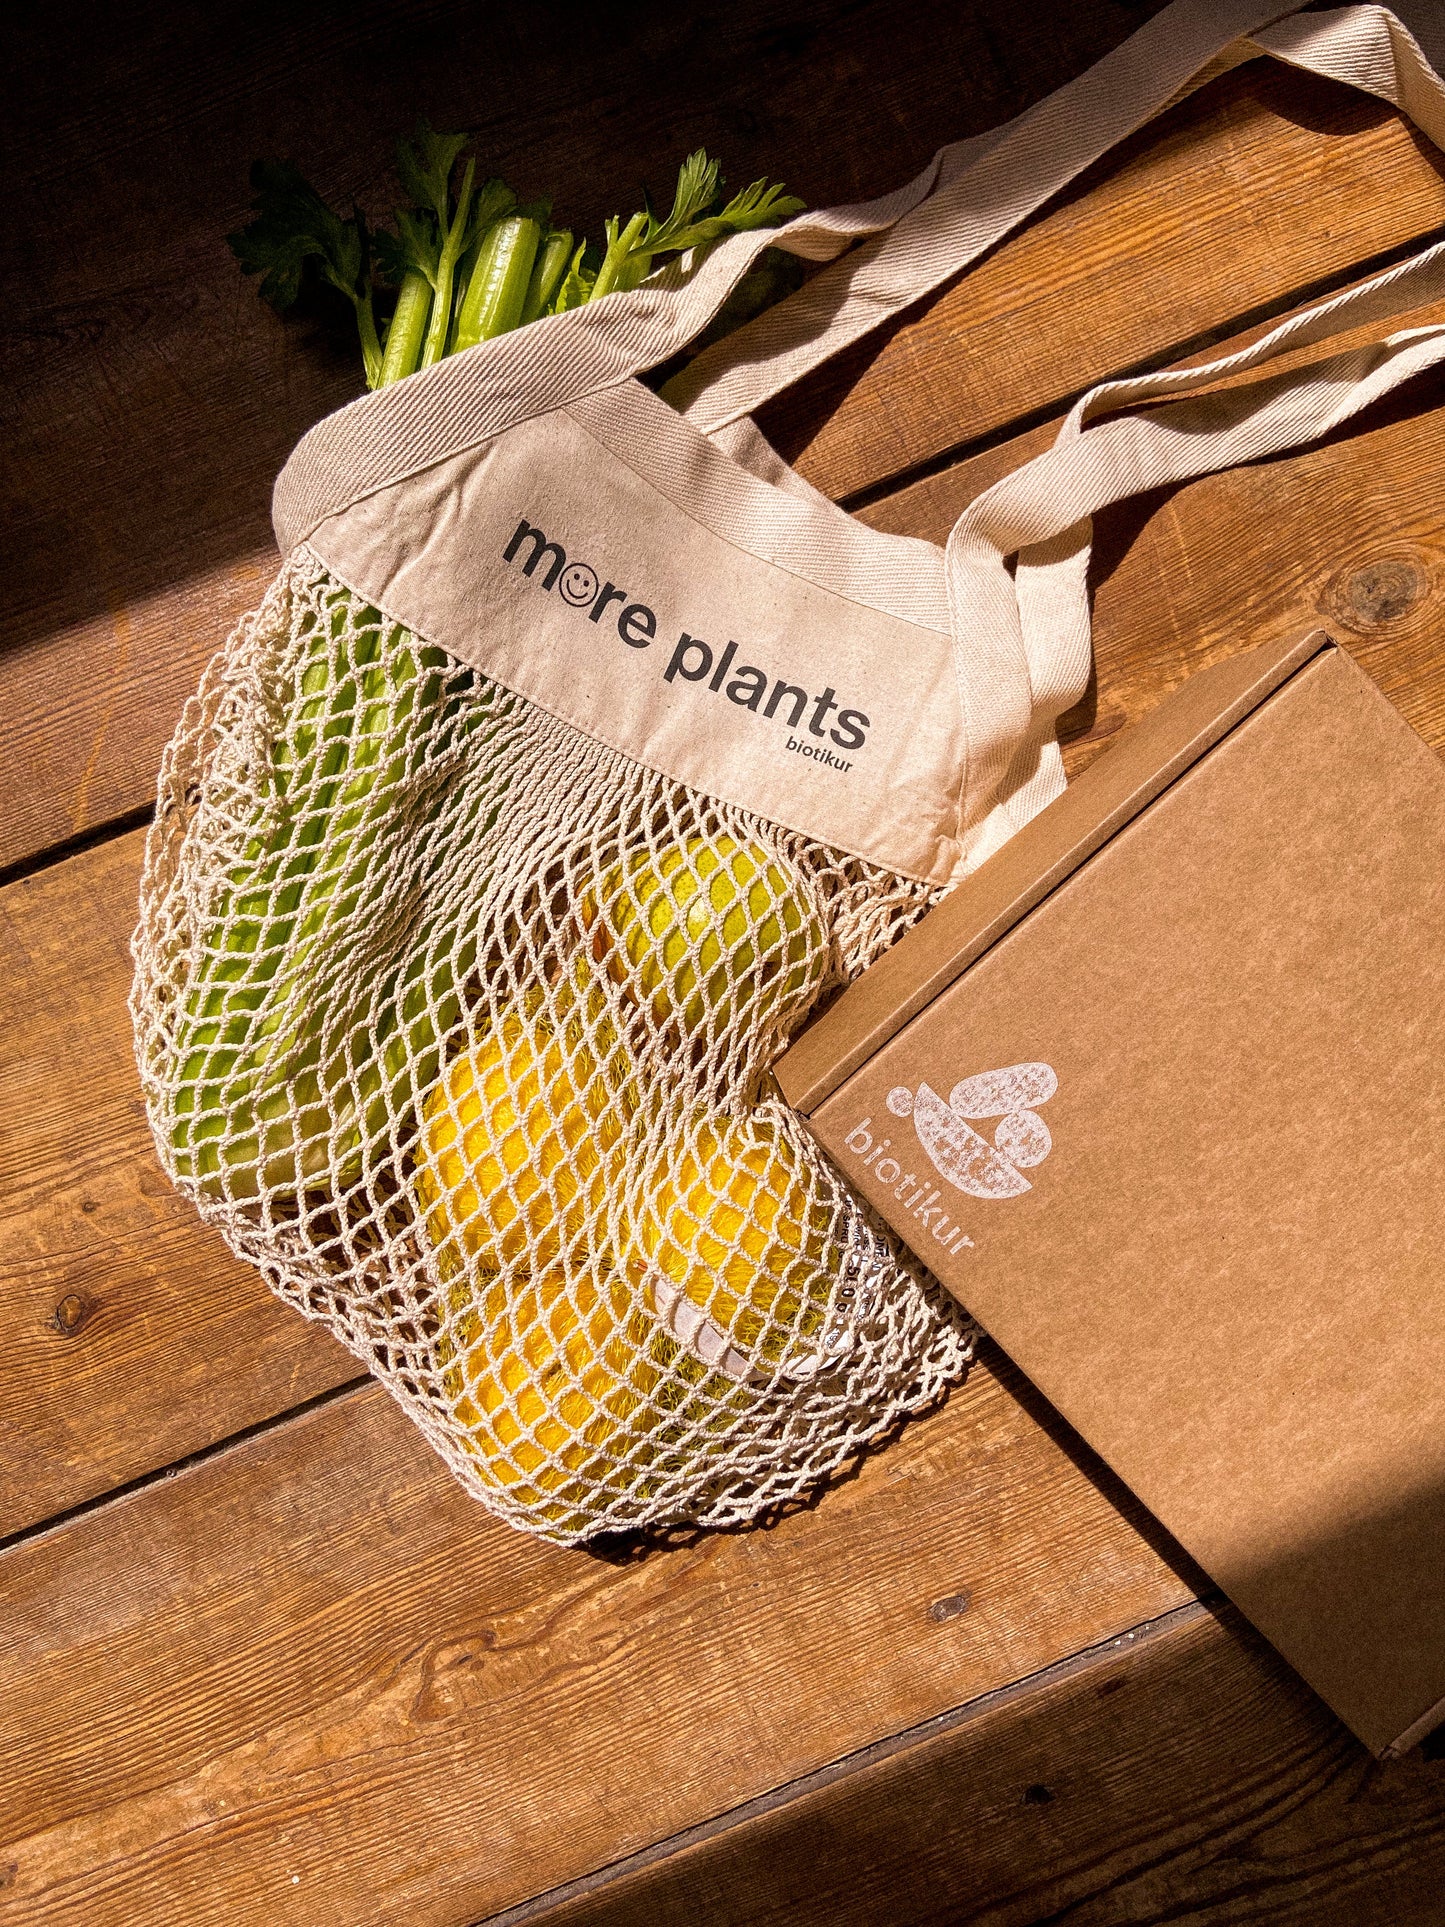 'More plants' fruit & veg market bag